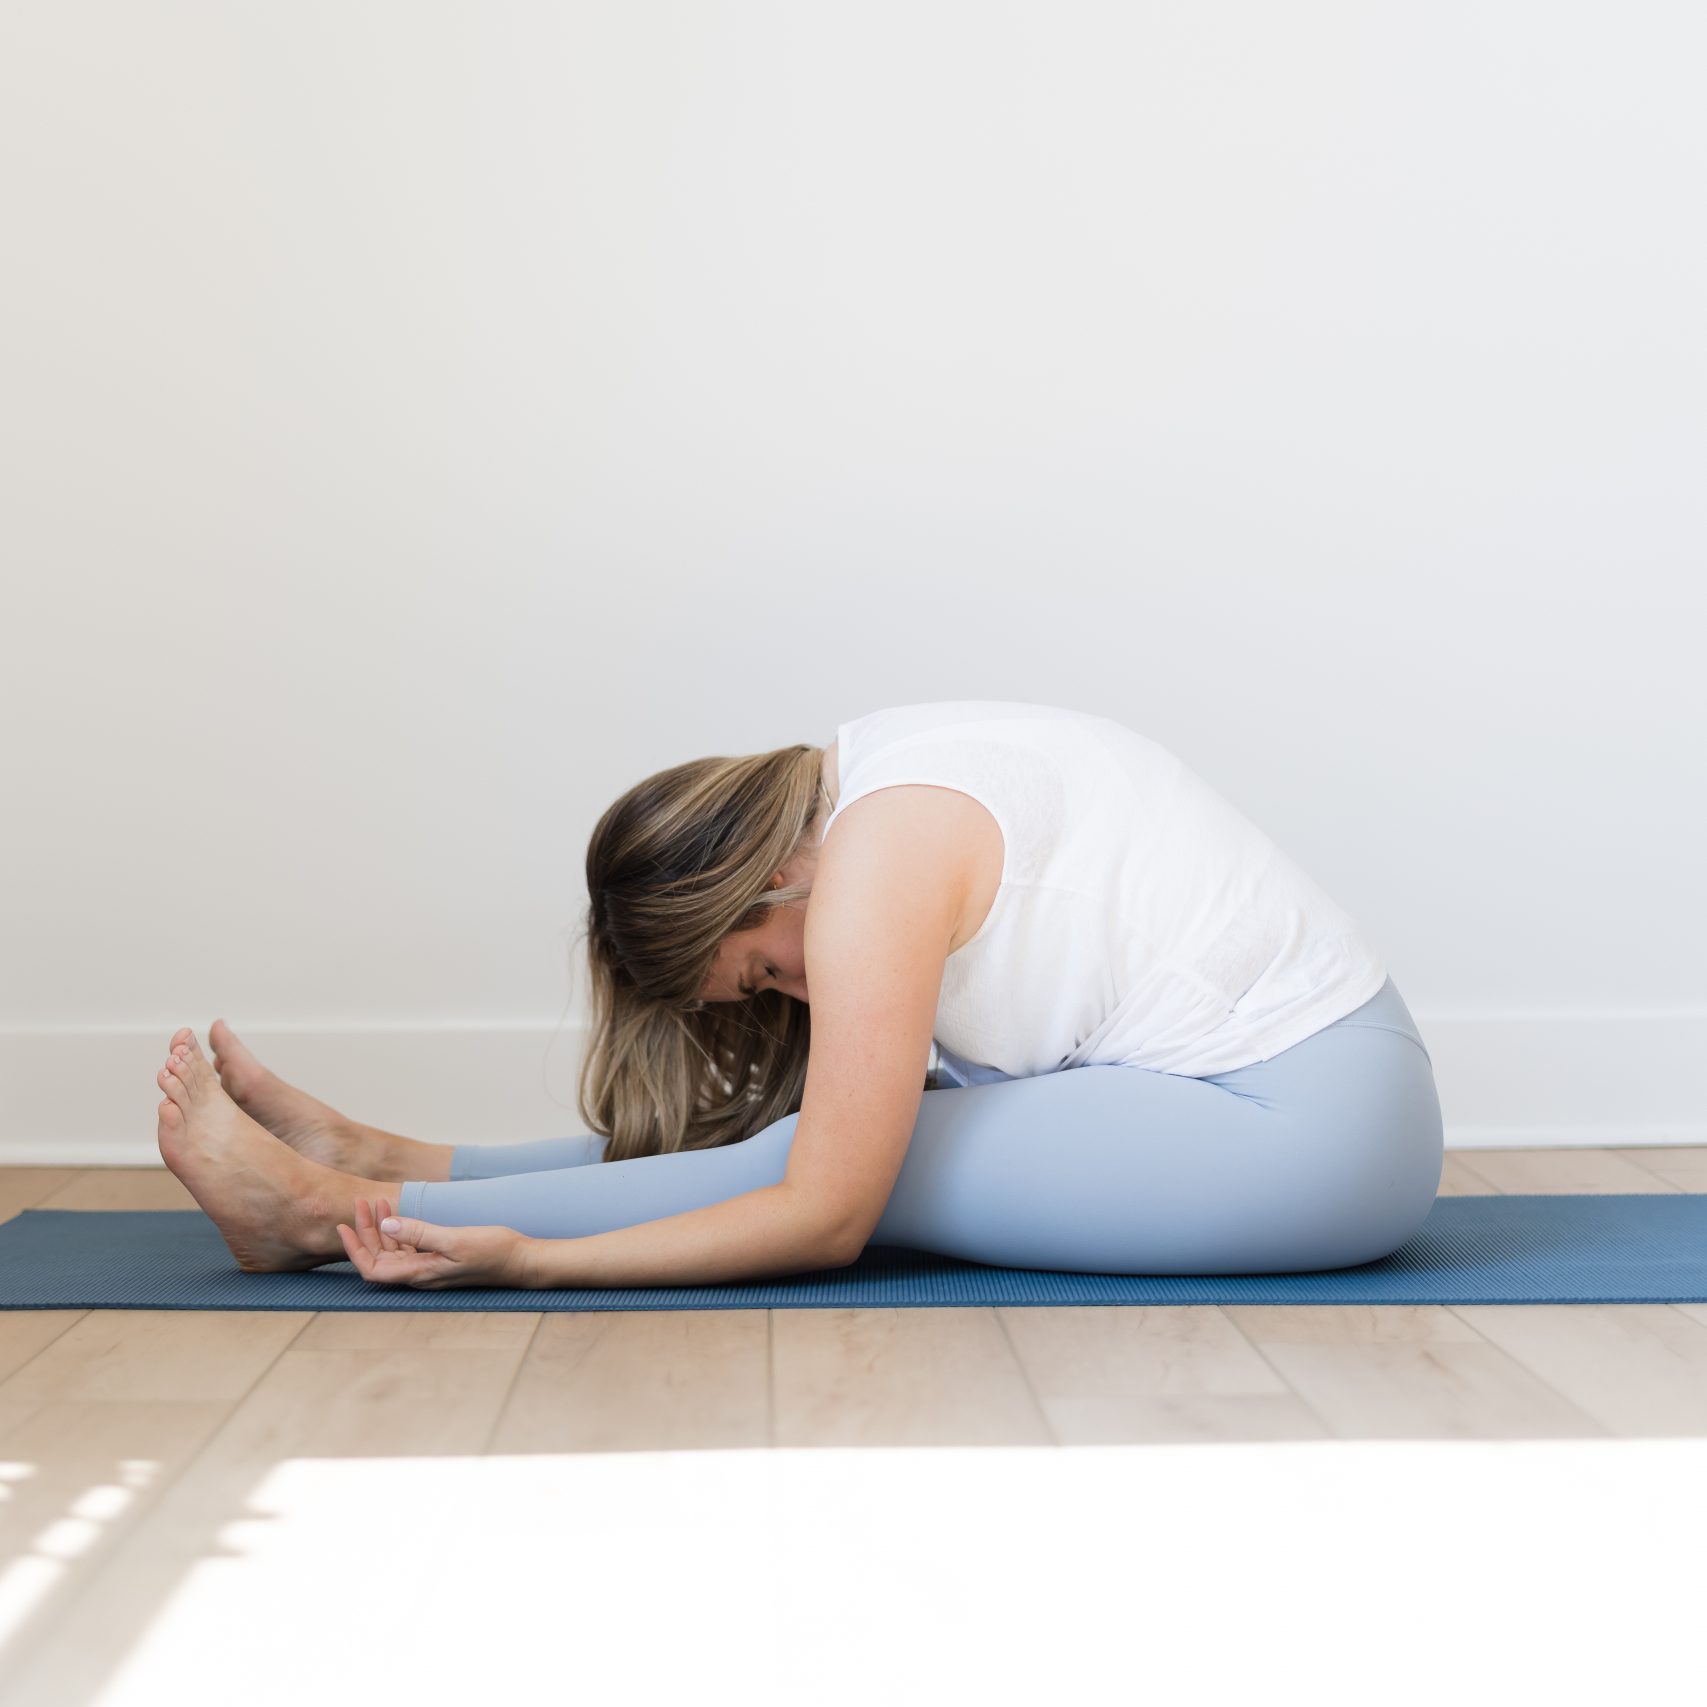 4 Tips for Teaching Yin Yoga